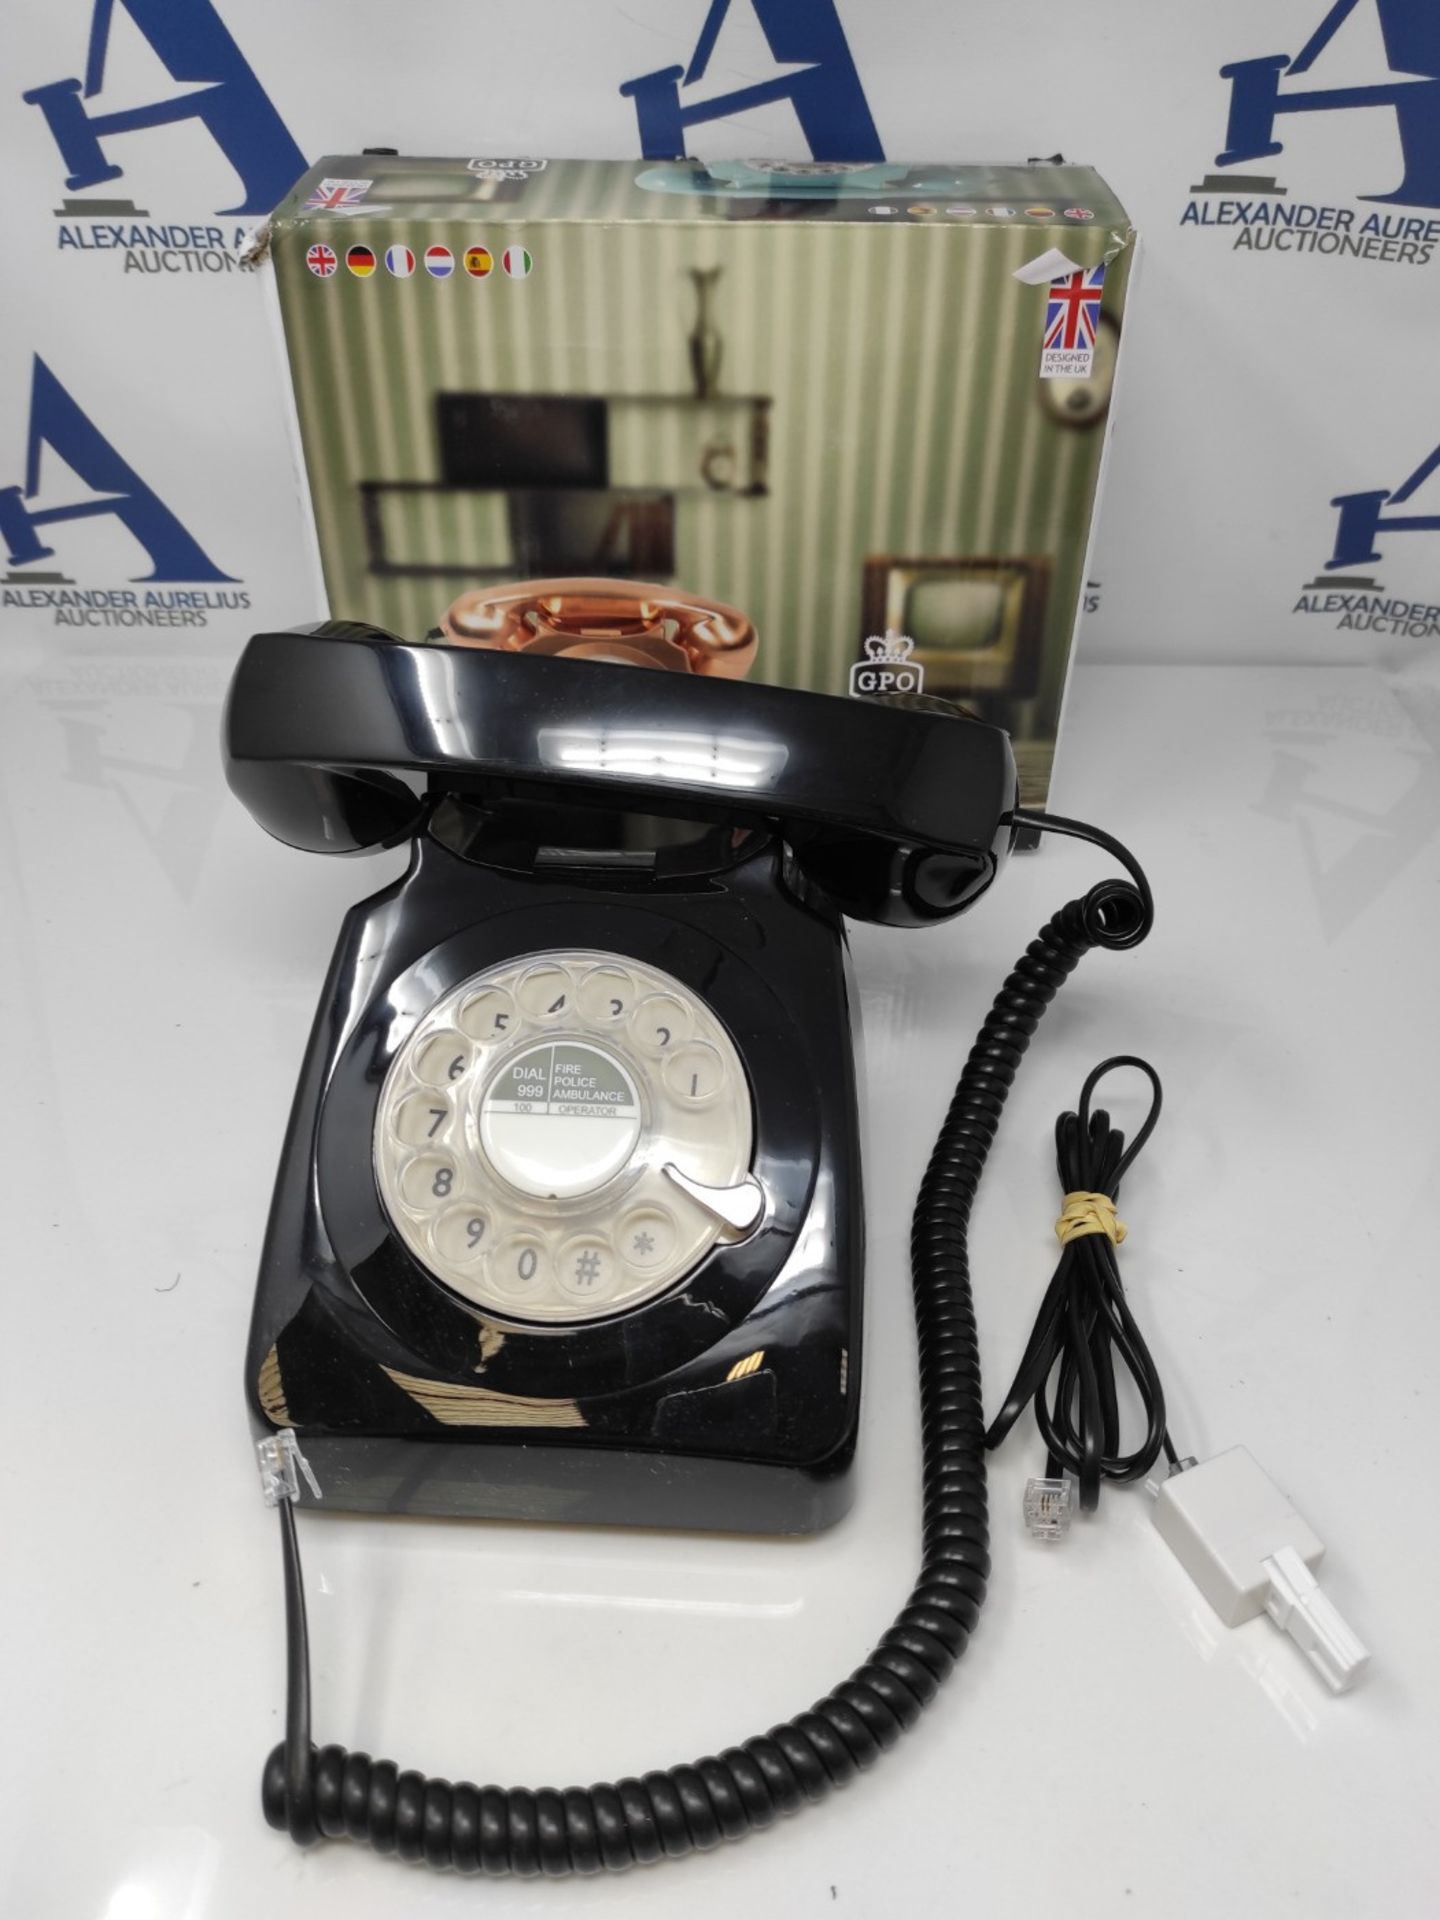 GPO 746 Rotary 1970s-Style Retro Landline Telephone, Classic Telephone with Ringer On/ - Image 2 of 2